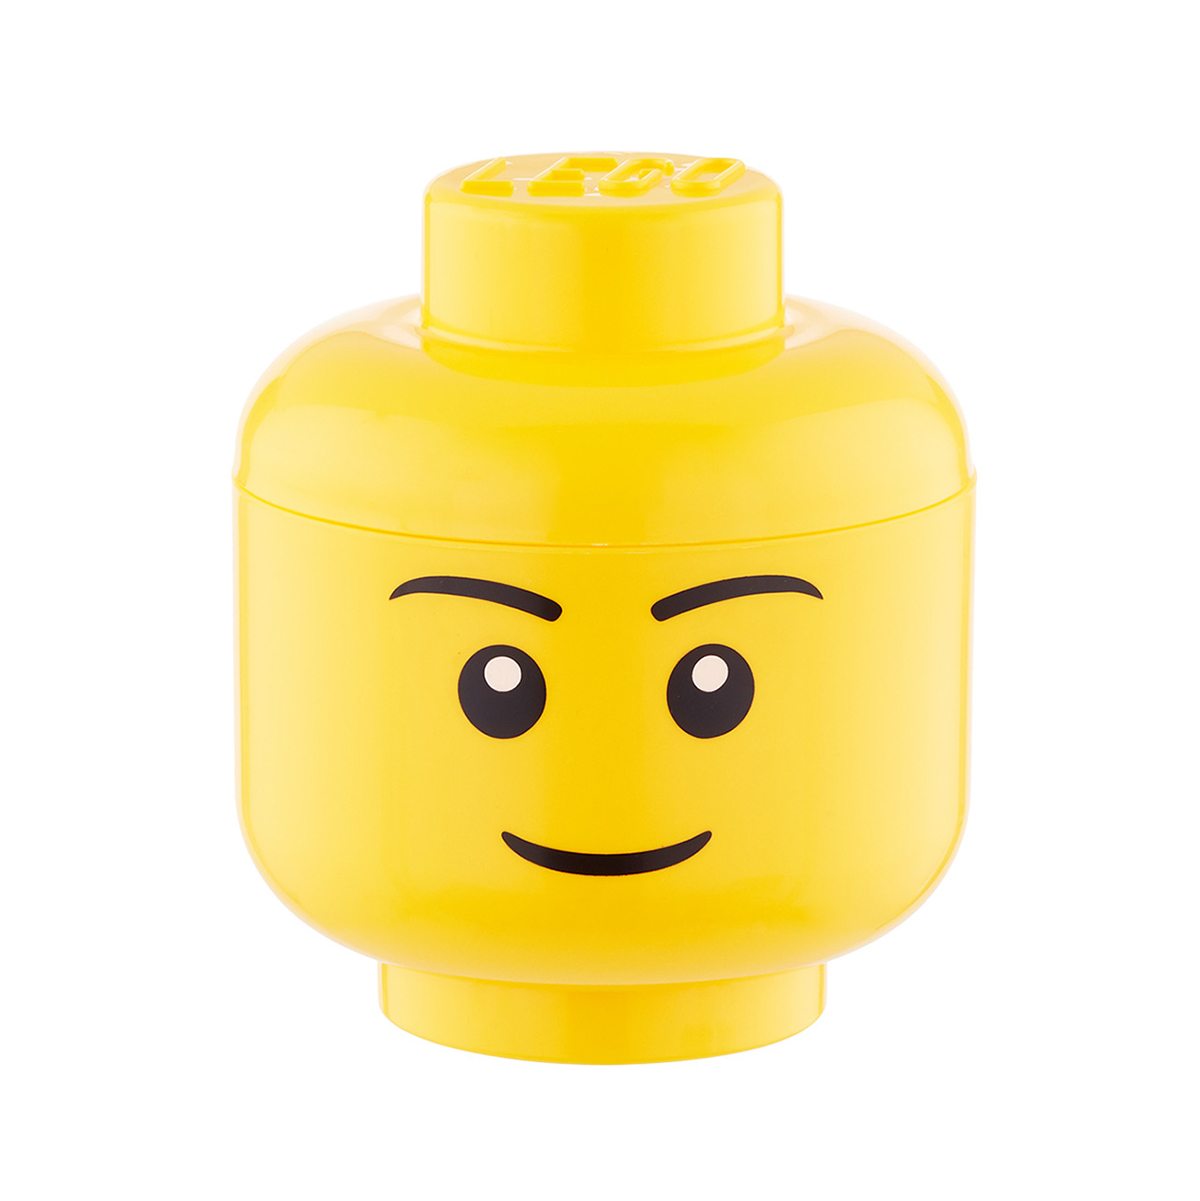 Lego Small Storage Head Yellow